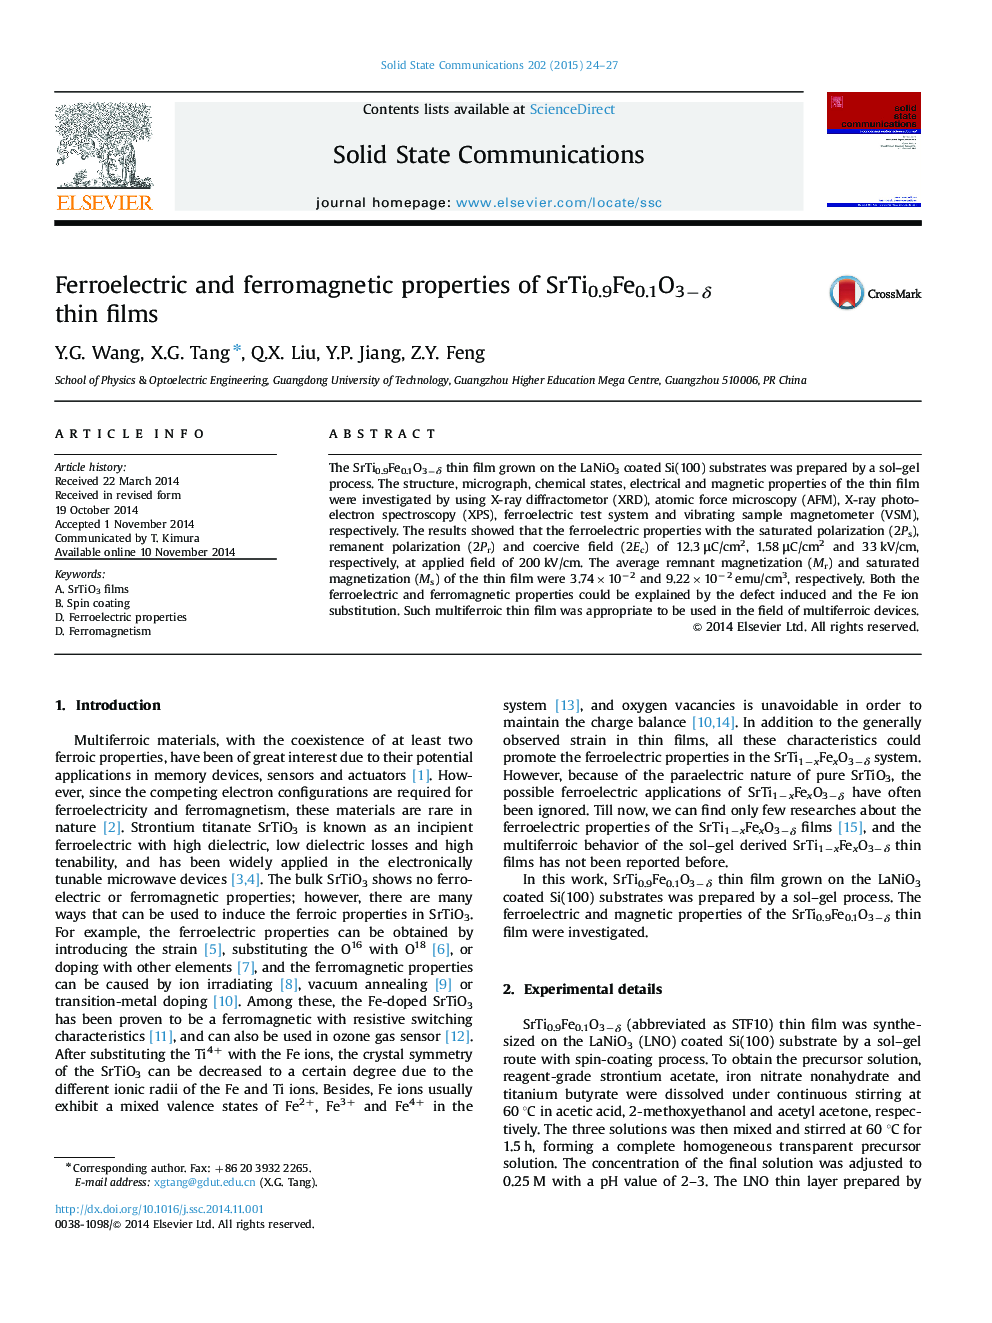 Ferroelectric and ferromagnetic properties of SrTi0.9Fe0.1O3−δ thin films